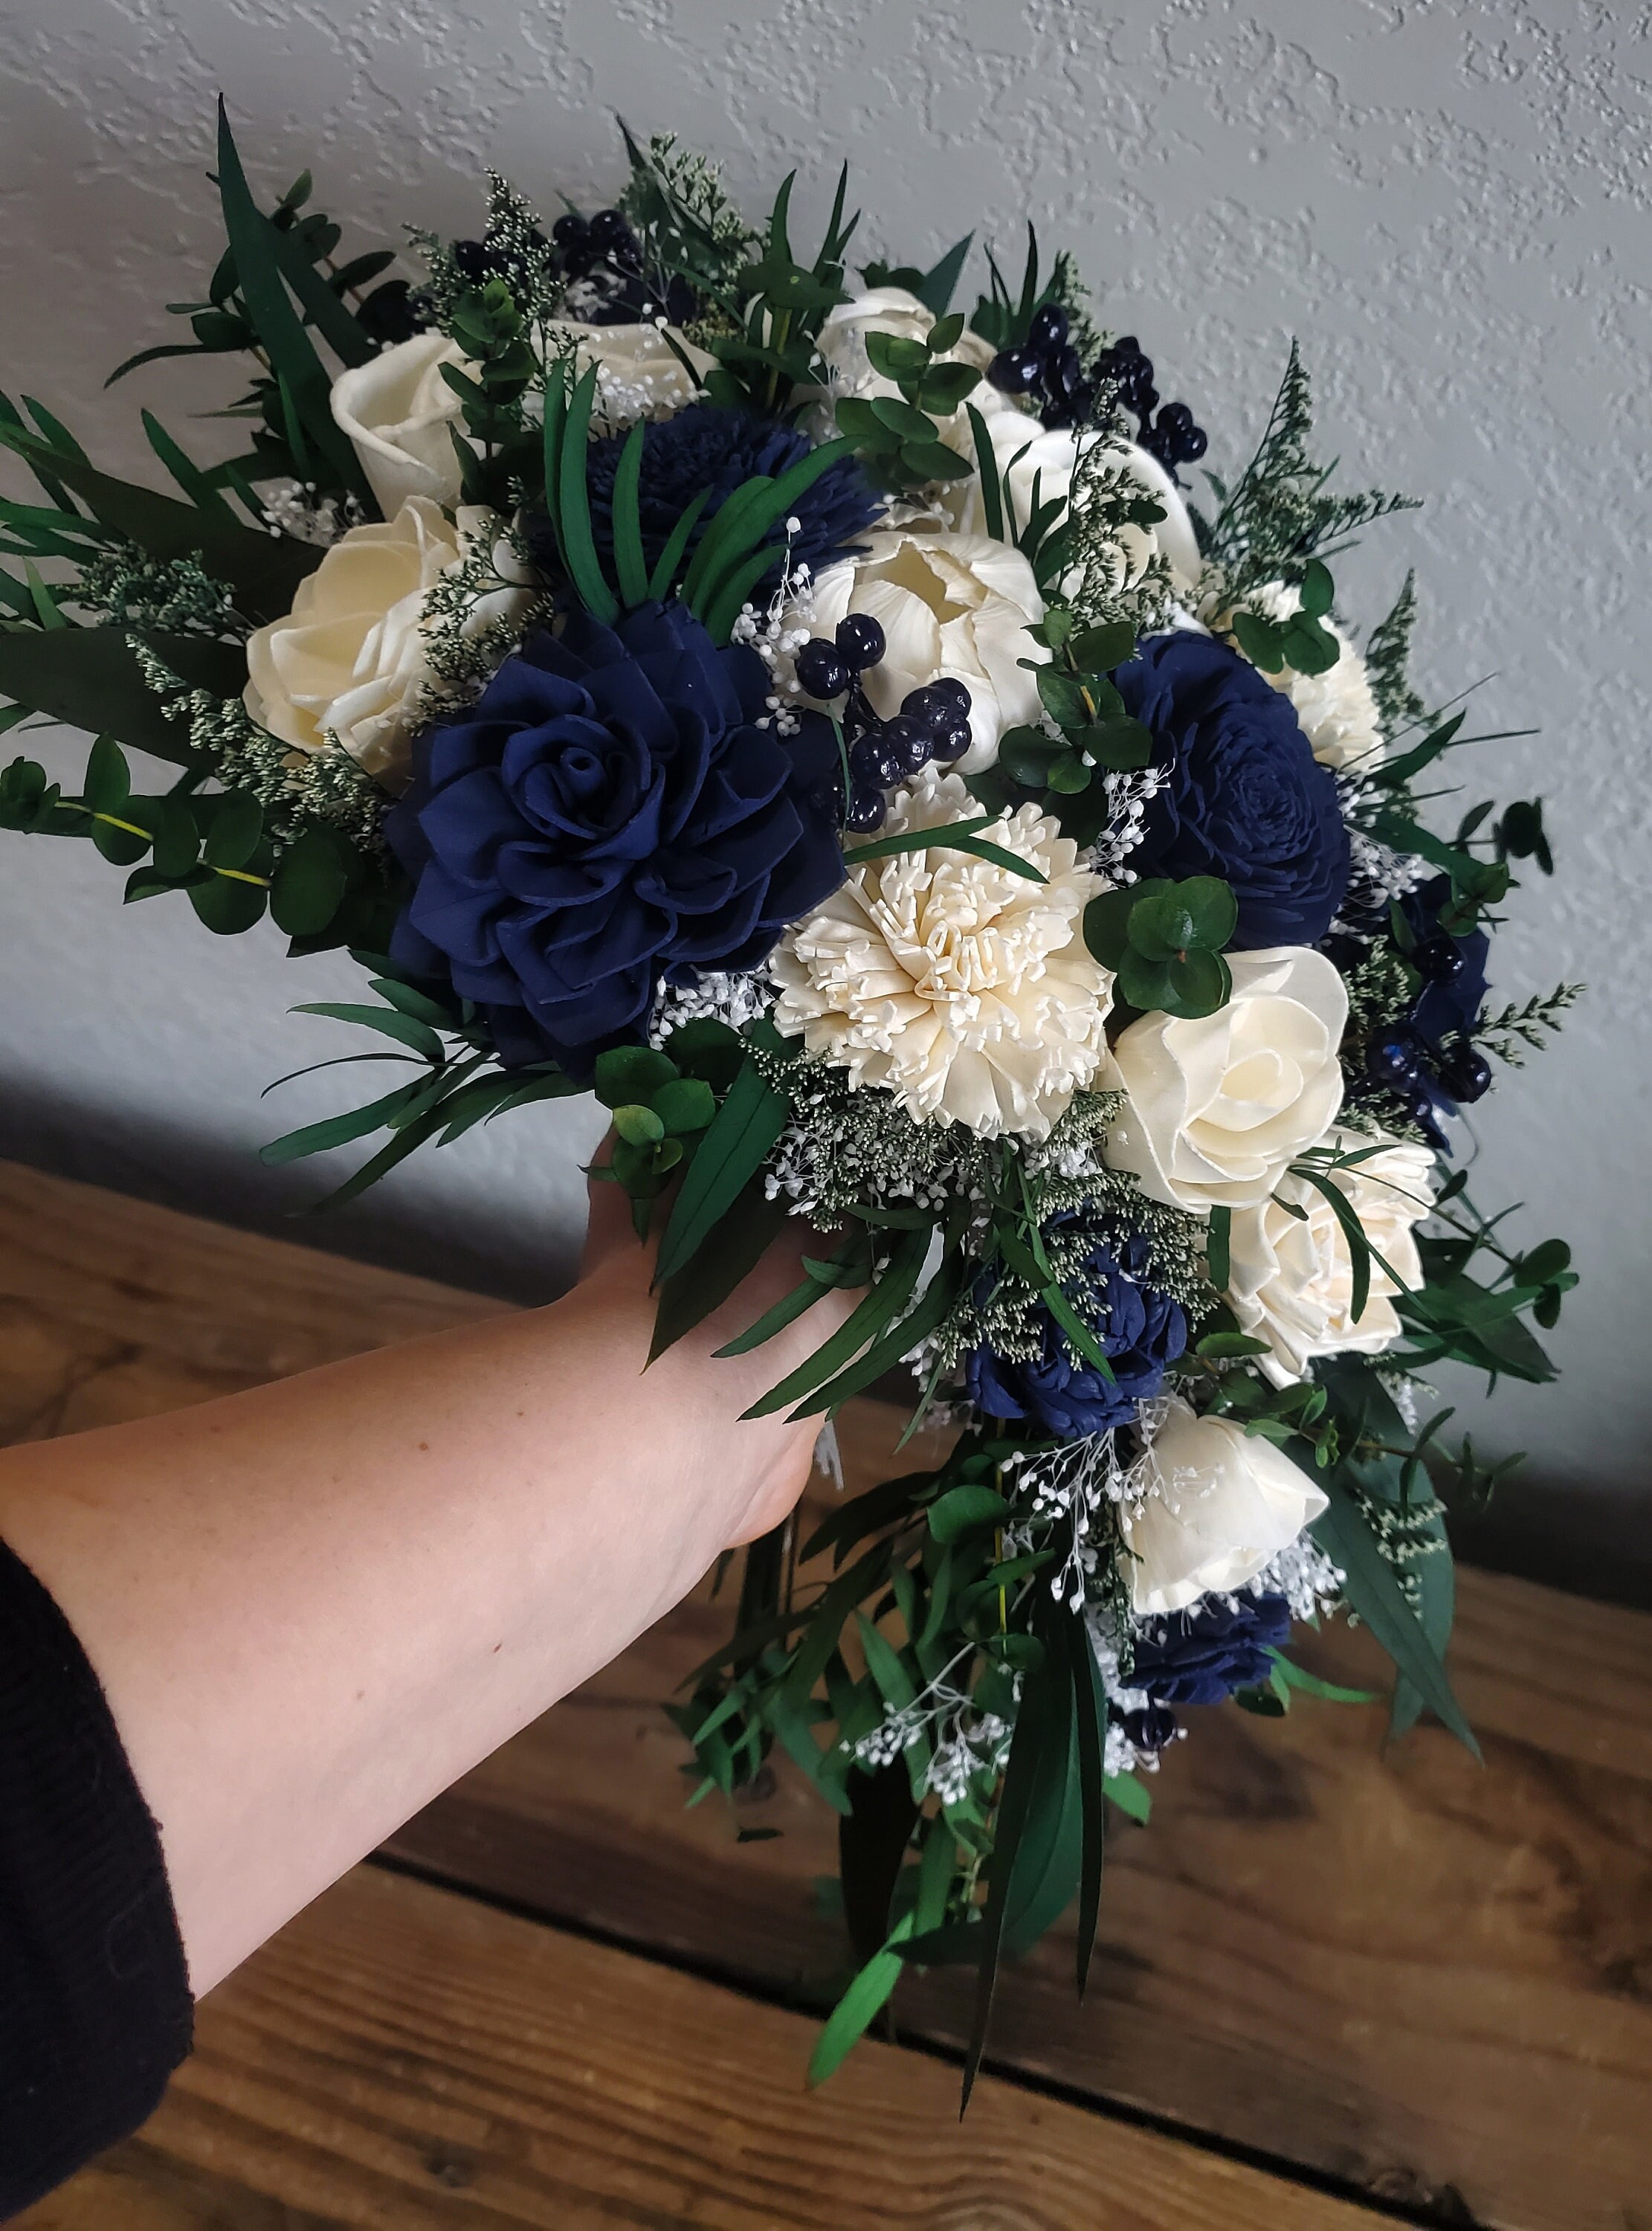 Haizang Design│Romantic Starry Blue. Dry flower bouquet/bridal